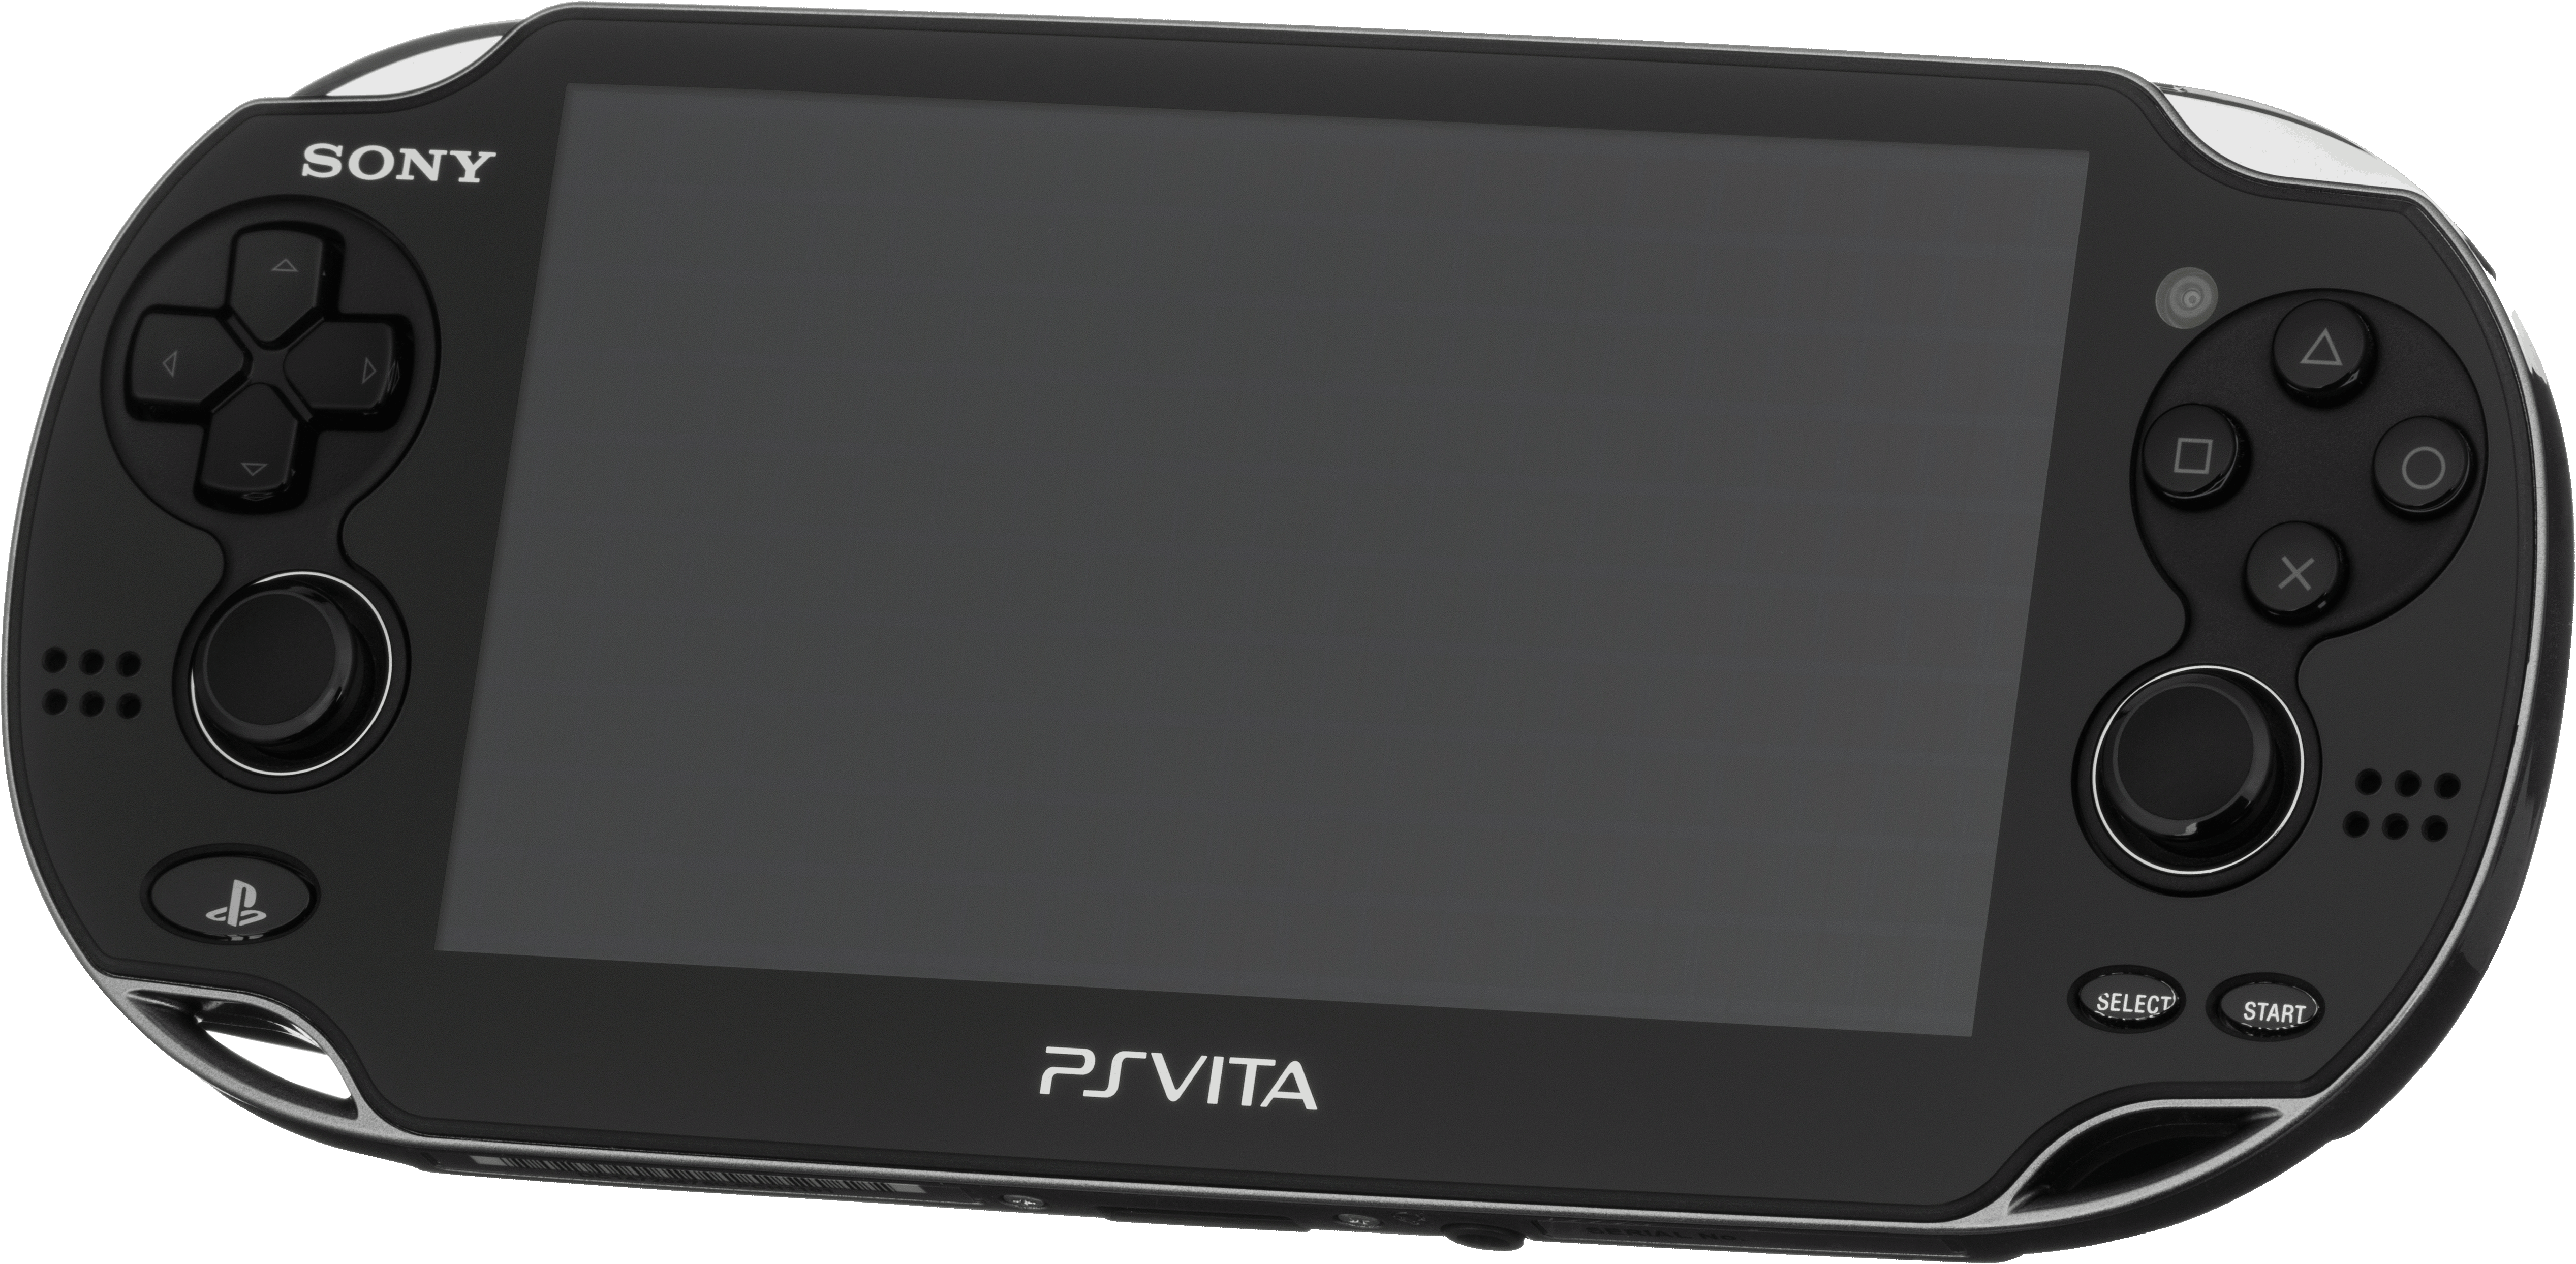 Игровая приставка найти. Sony PSP Vita. PS Vita 1000. Sony PS Vita TV 70. Sony PLAYSTATION Portable 2004.